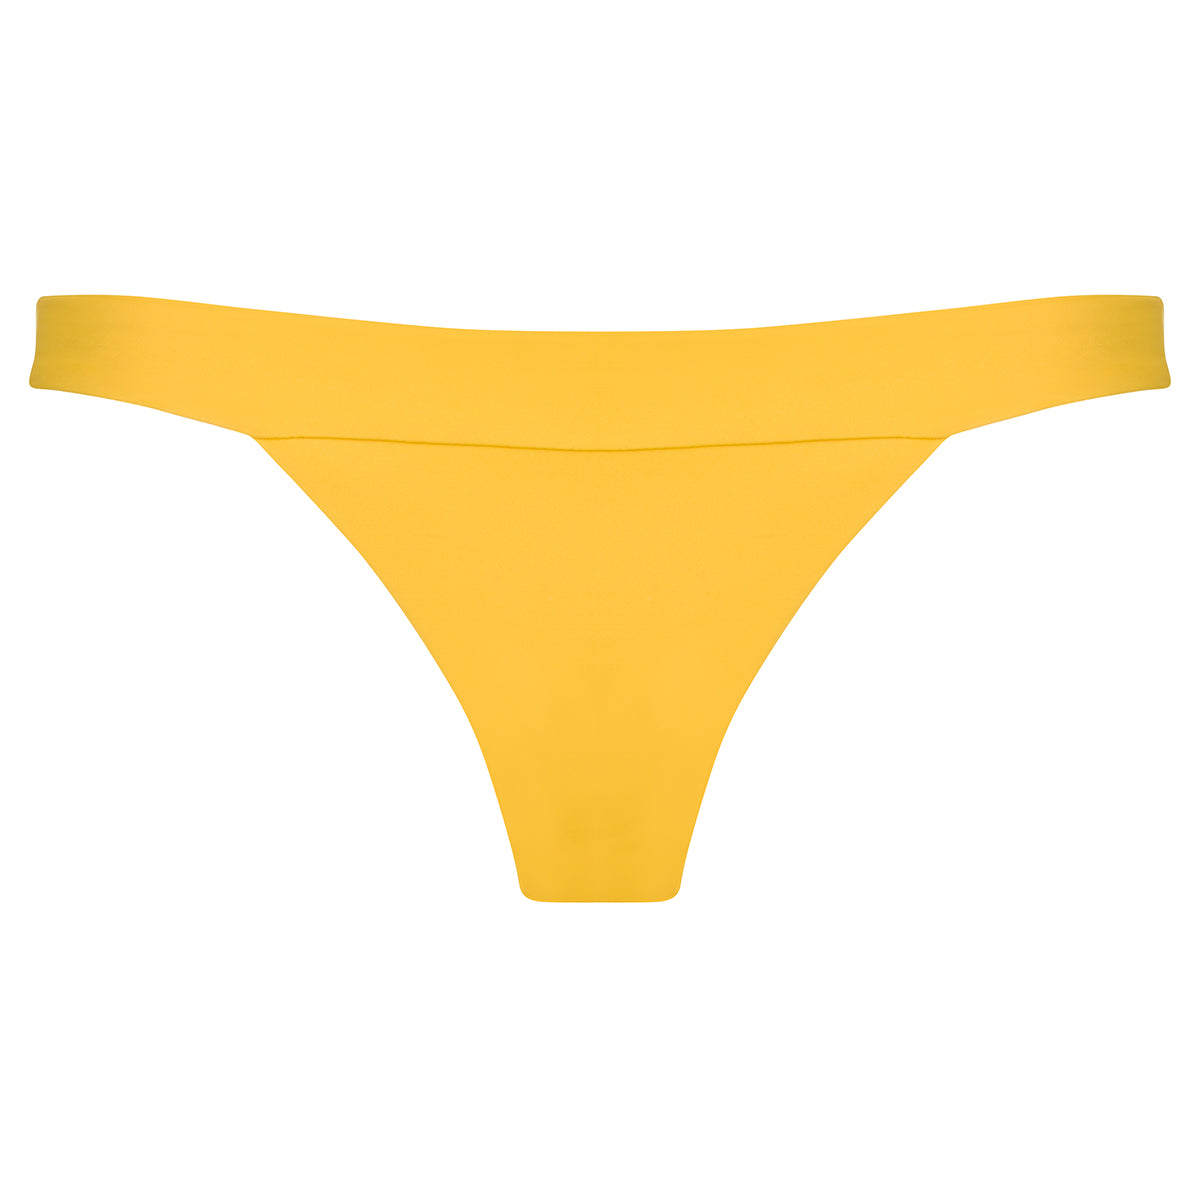 Lasso: The Banded Bikini Bottom